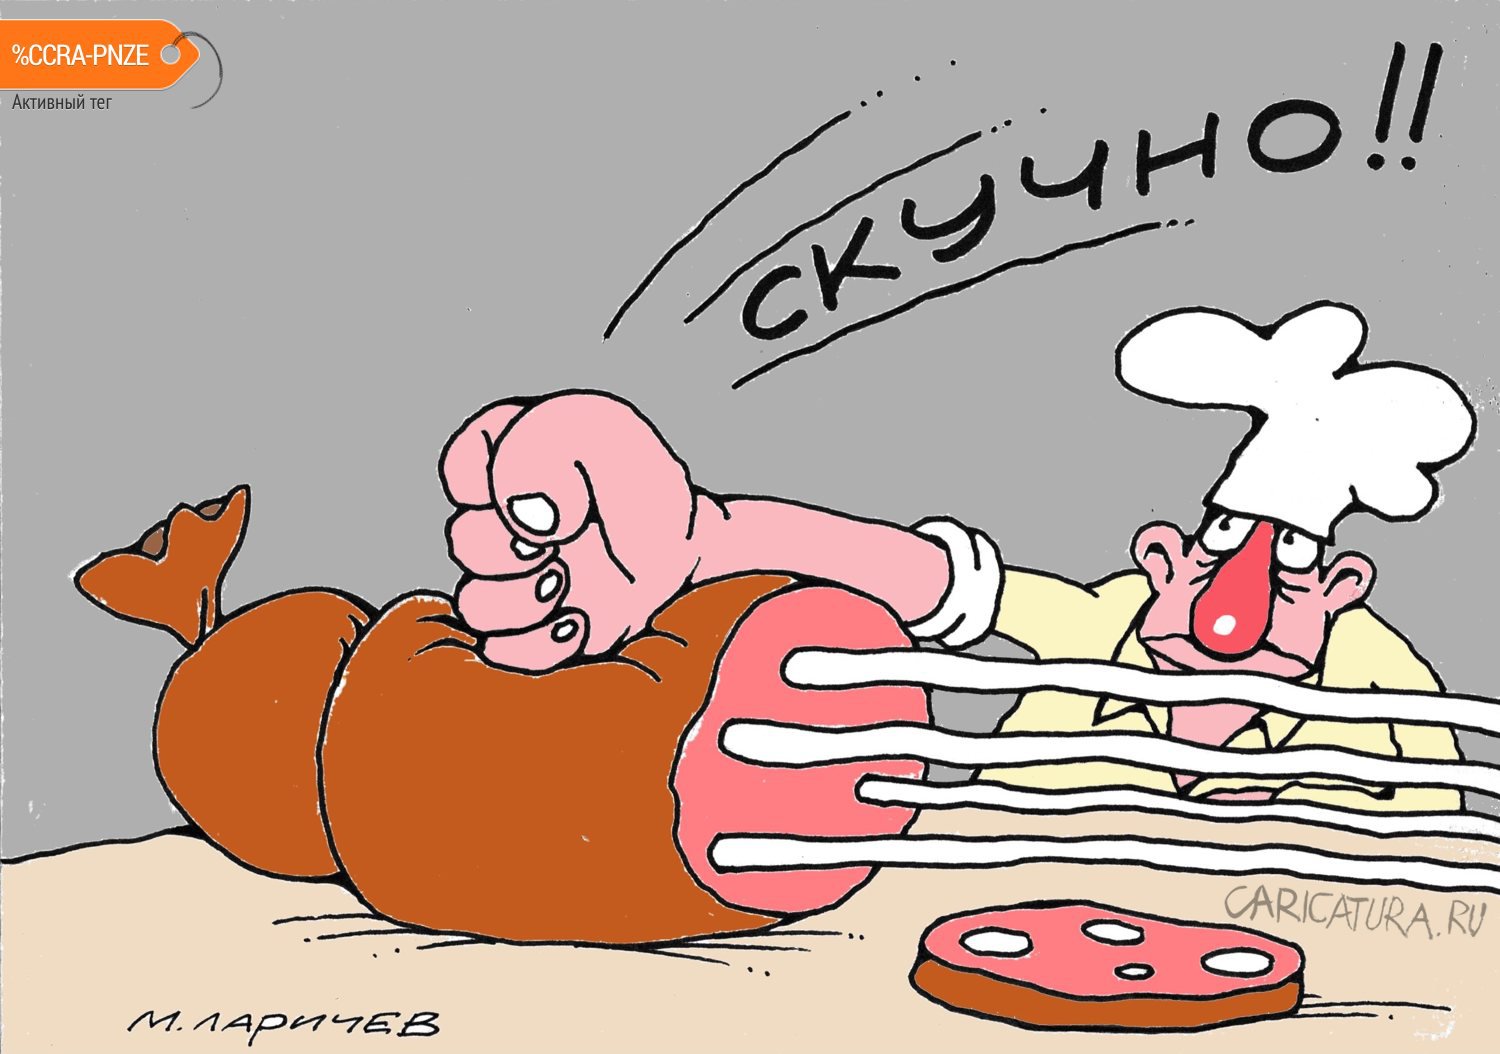 Карикатура "Скучища", Михаил Ларичев